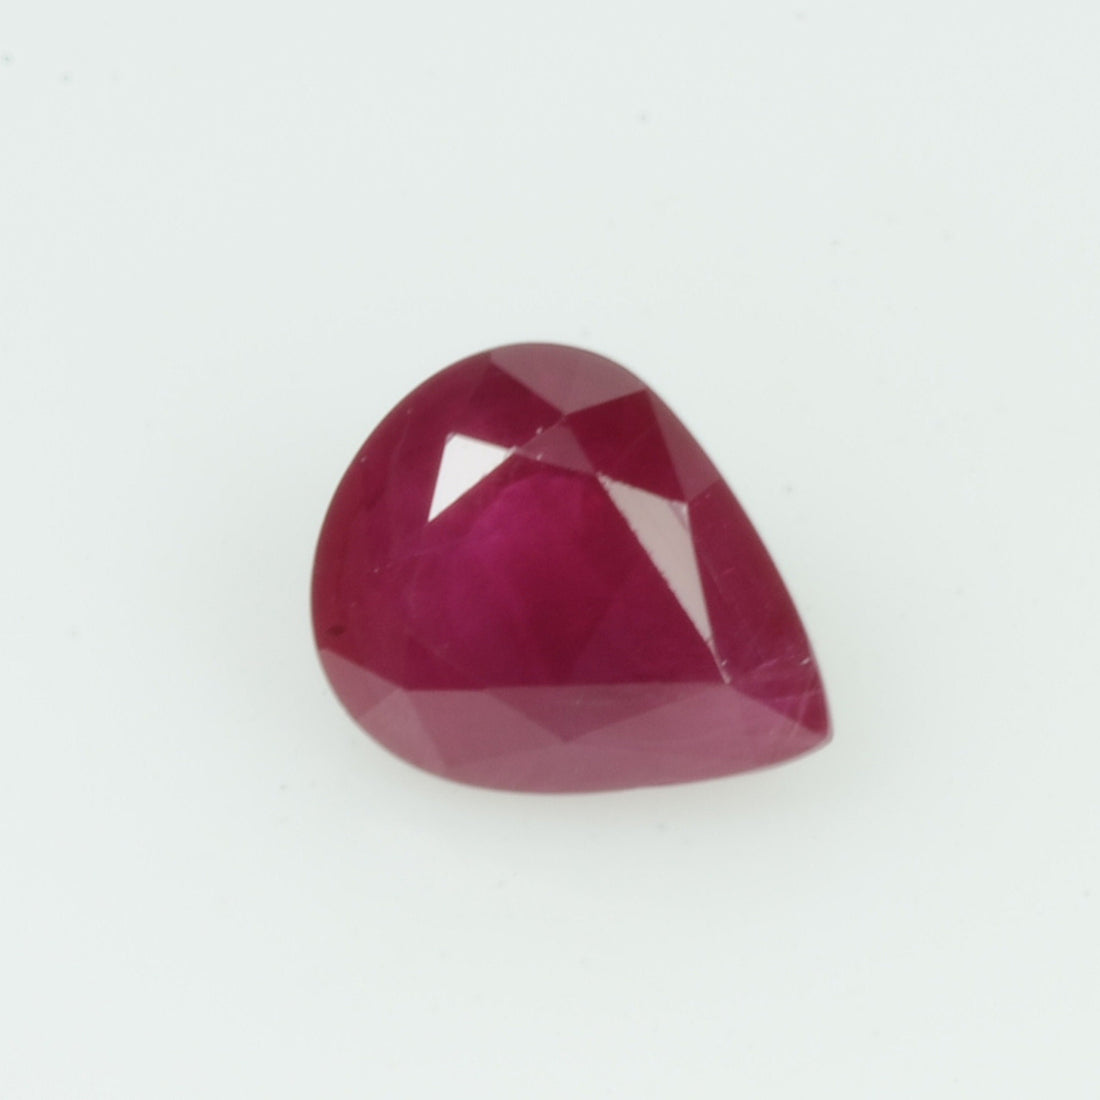 0.67 Cts Natural Burma Ruby Loose Gemstone Pear Cut